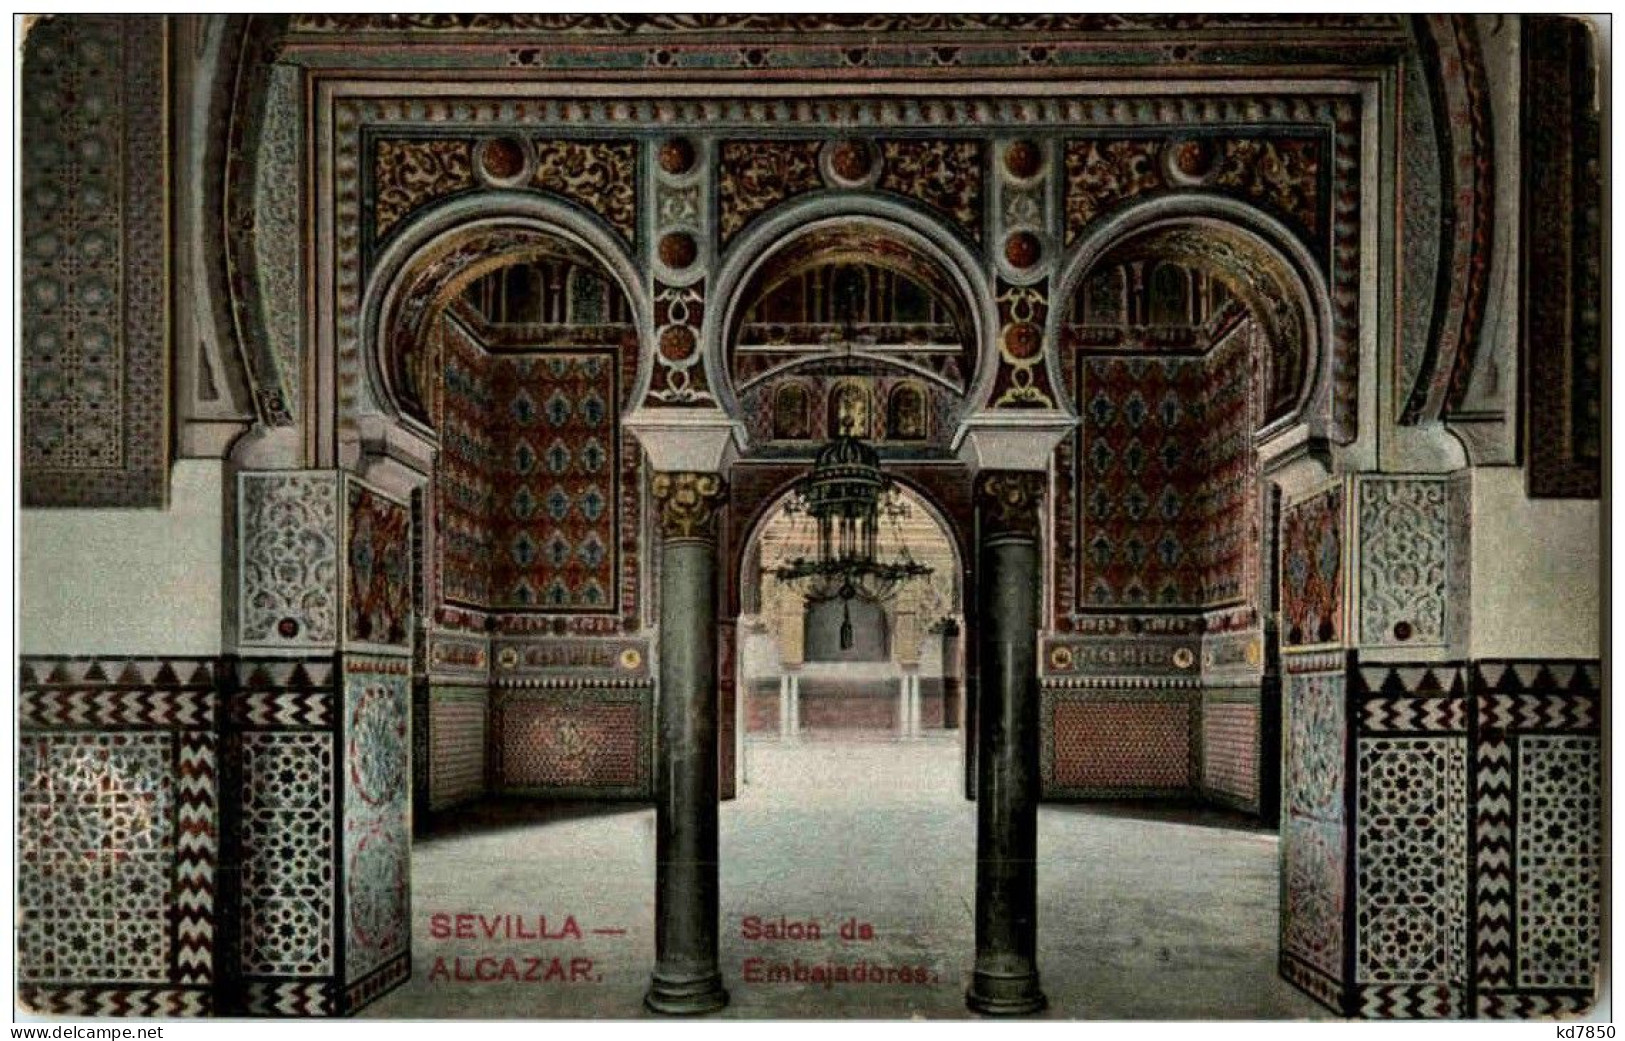 Sevilla - Alcazar - Salon De Embajadores - Sevilla